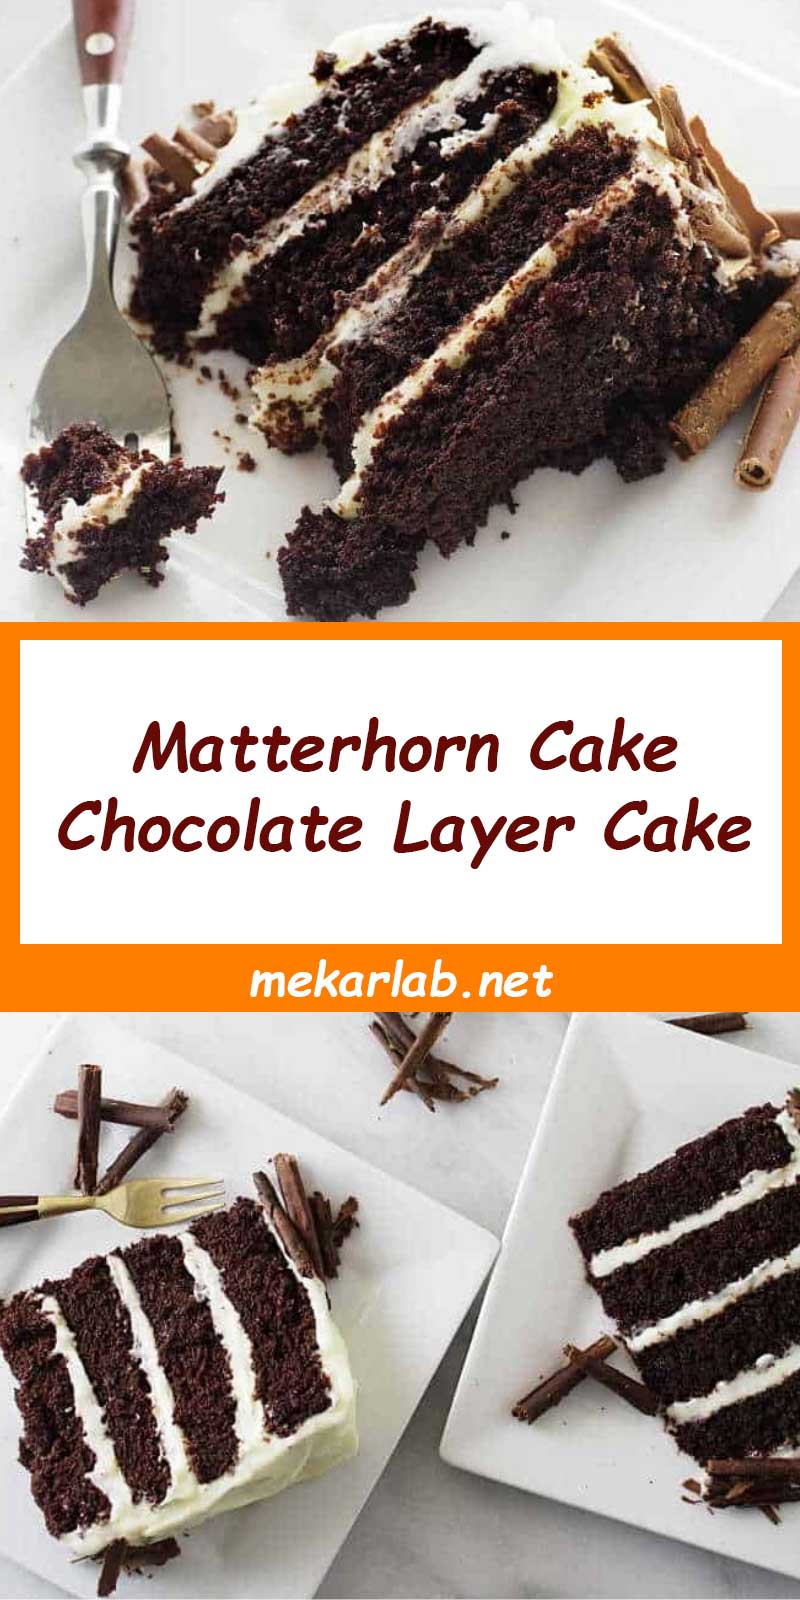 Matterhorn Cake - Chocolate Layer Cake